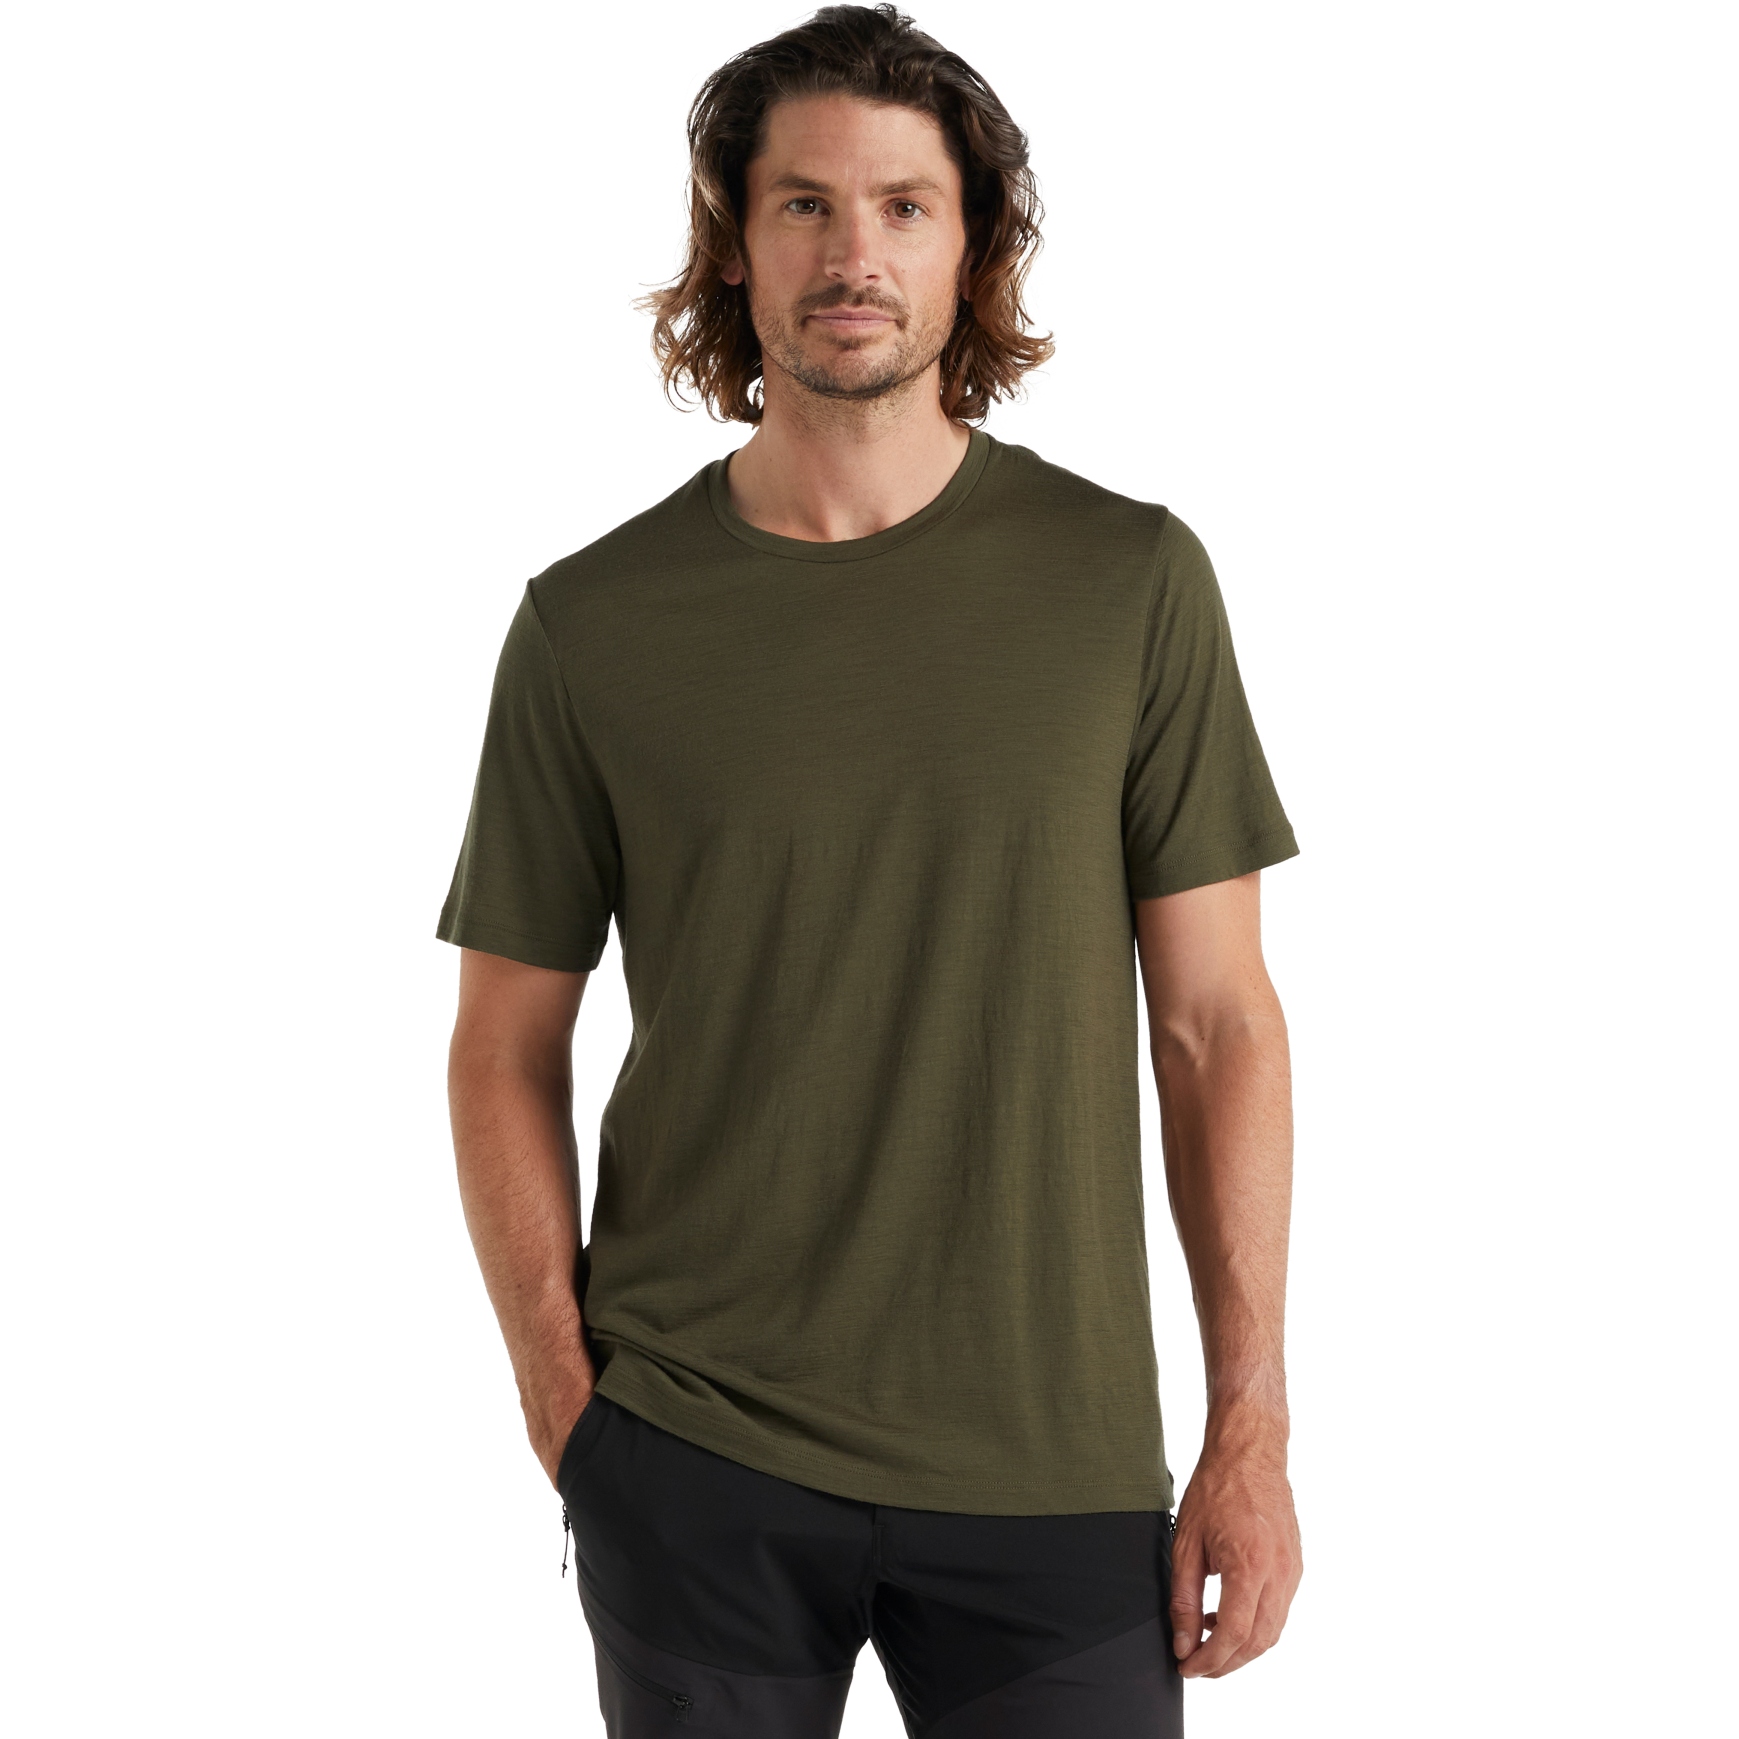 Image of Icebreaker Men's Tech Lite II T-Shirt - Loden